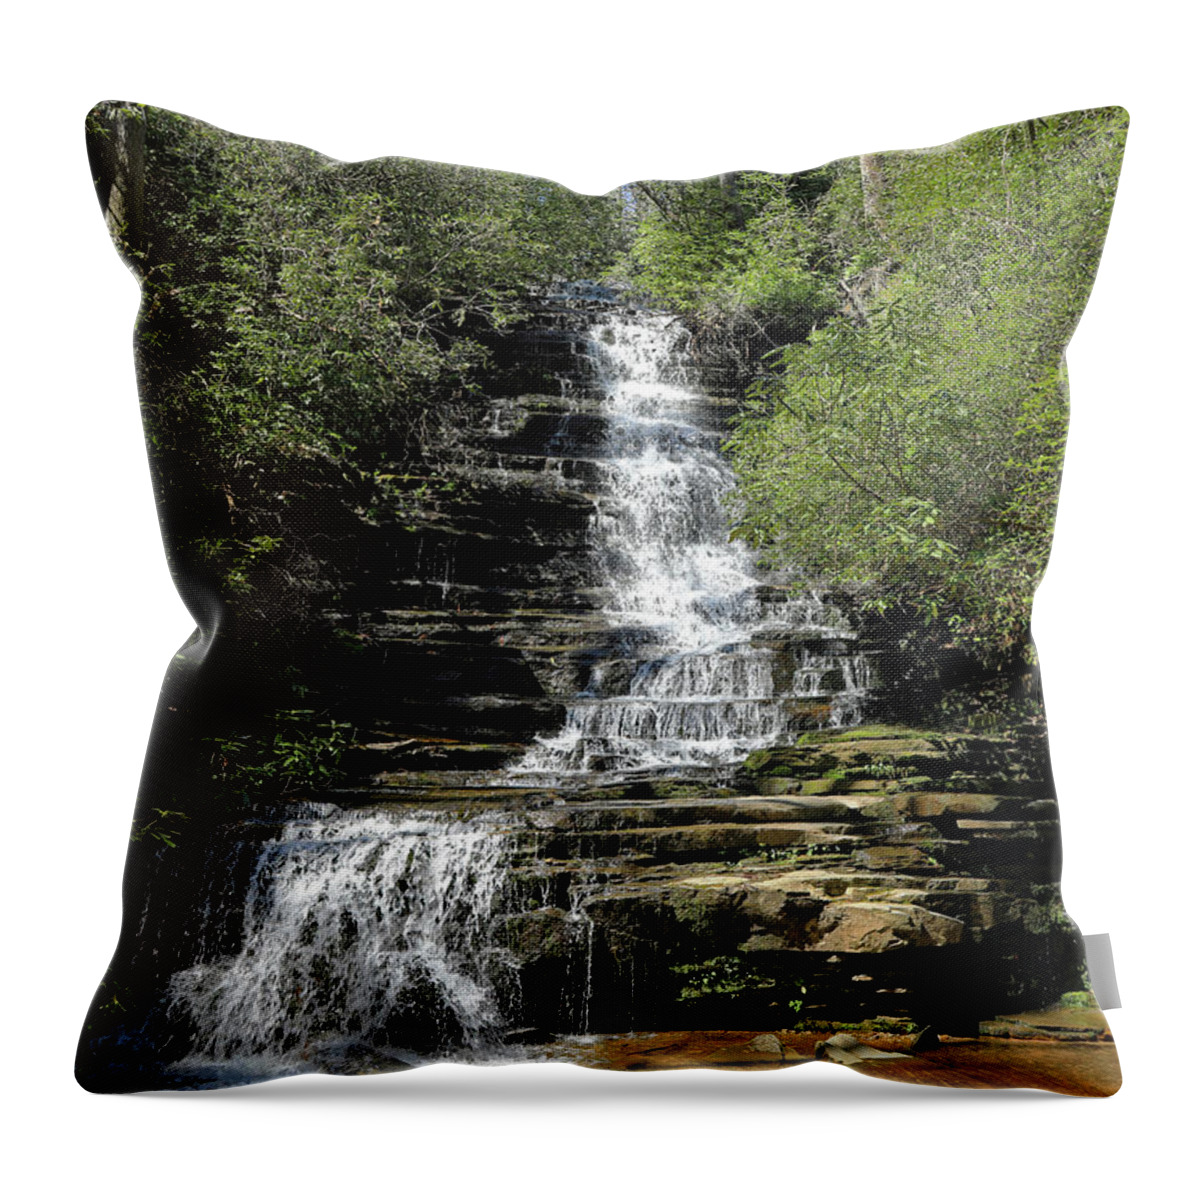 Waterfall Throw Pillow featuring the photograph Waterfall - Panther Falls, Ga. by Richard Krebs